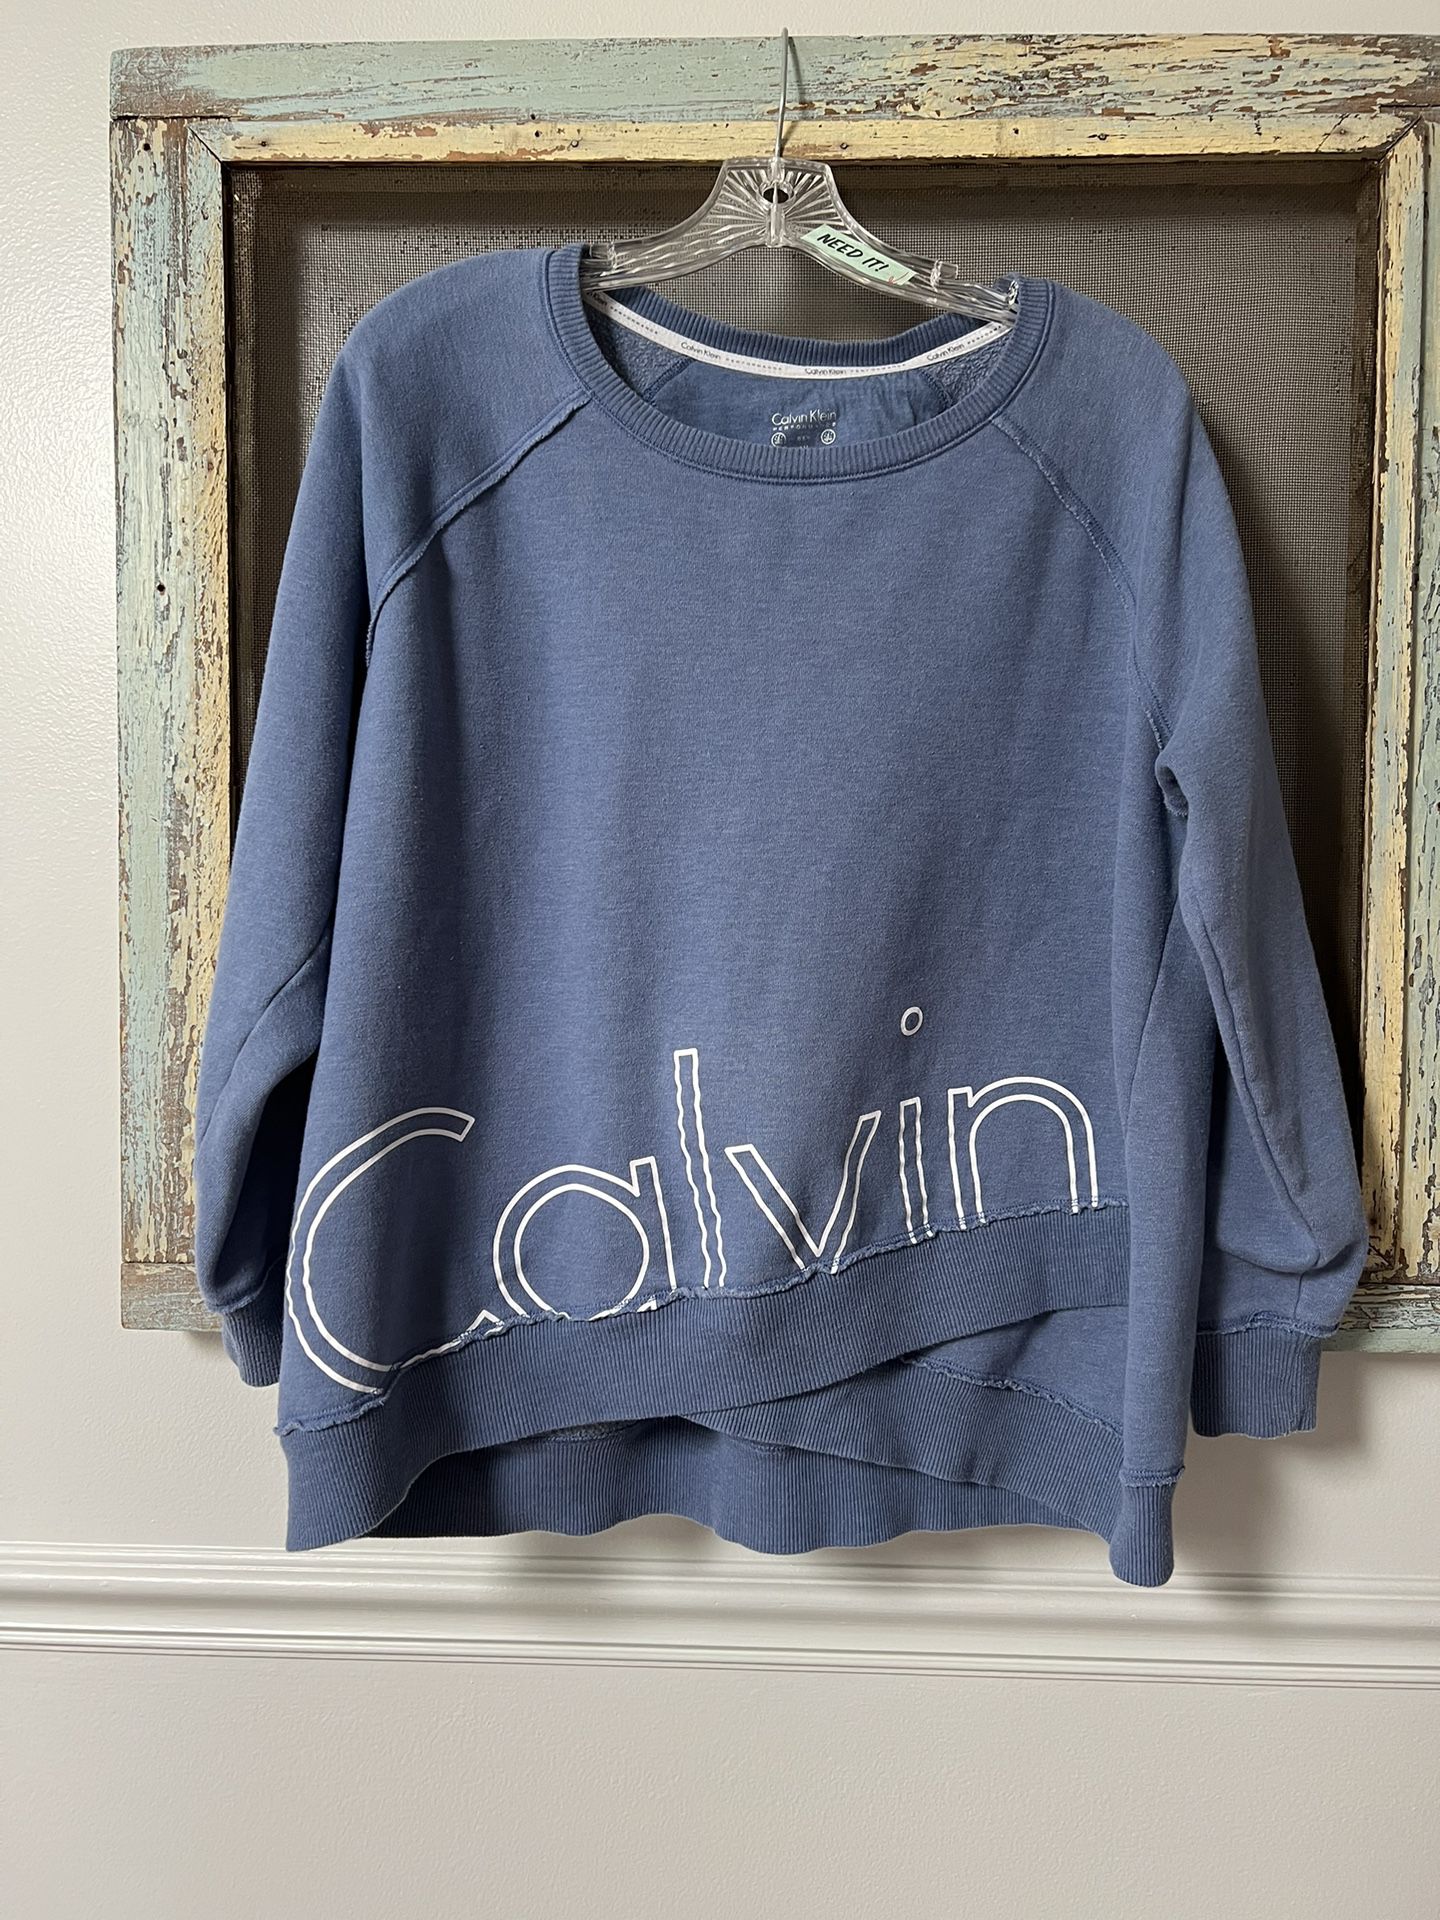 Blue Comfy P/O Sweatshirt by Calvin Klein. Size 1X